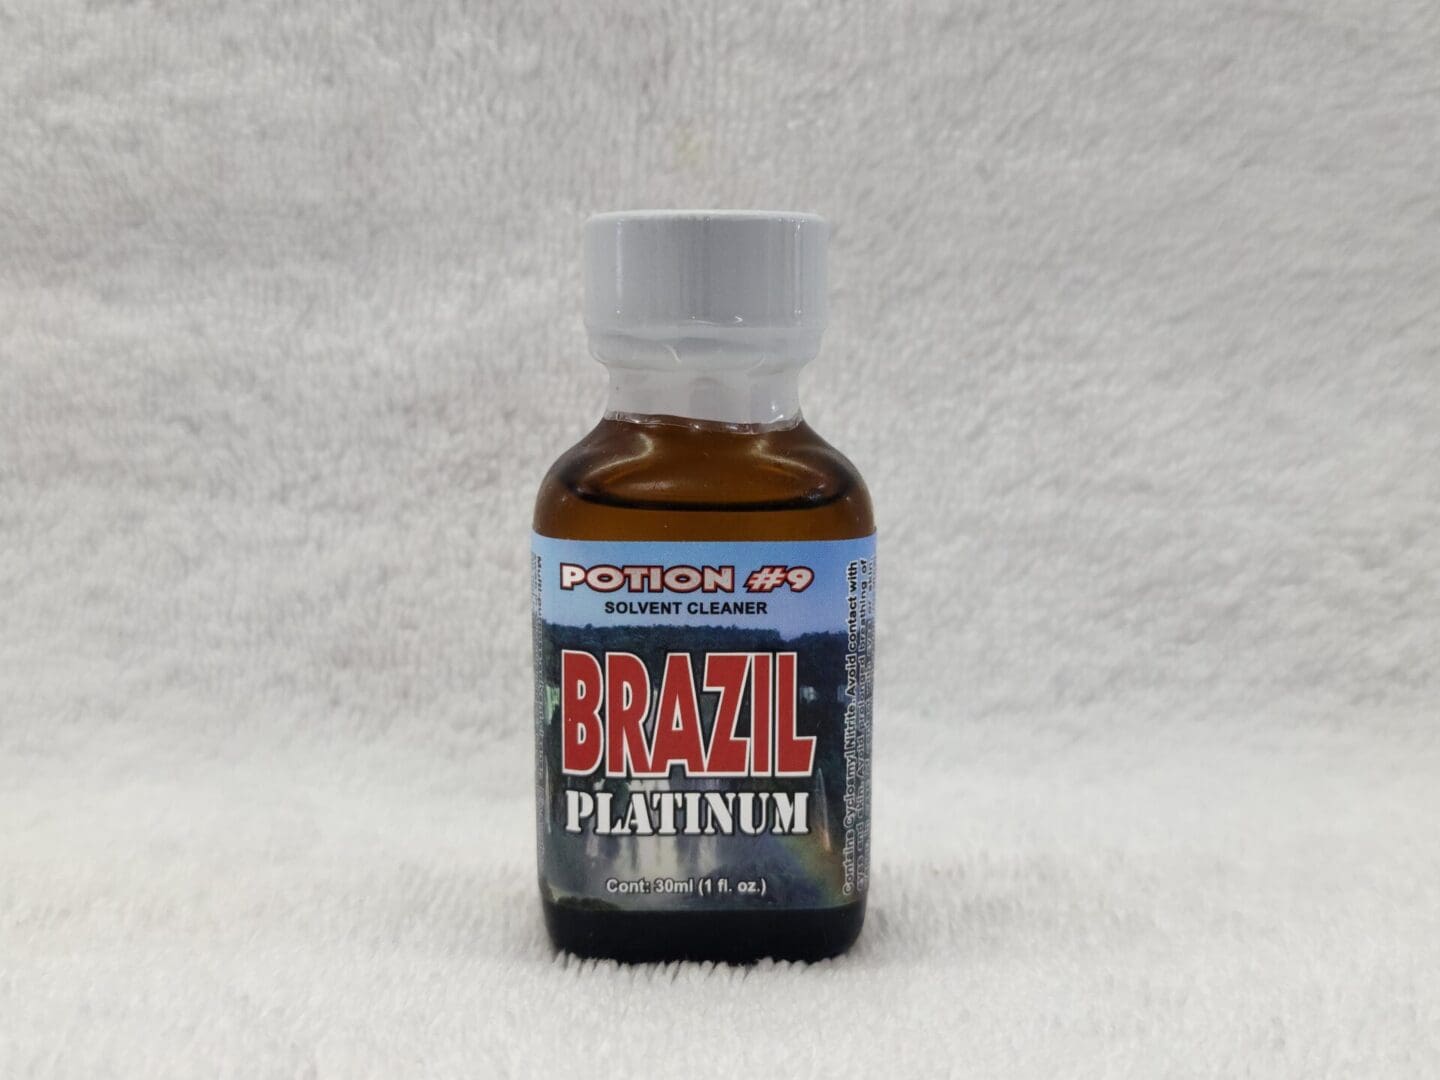 A bottle of brazilian platinum